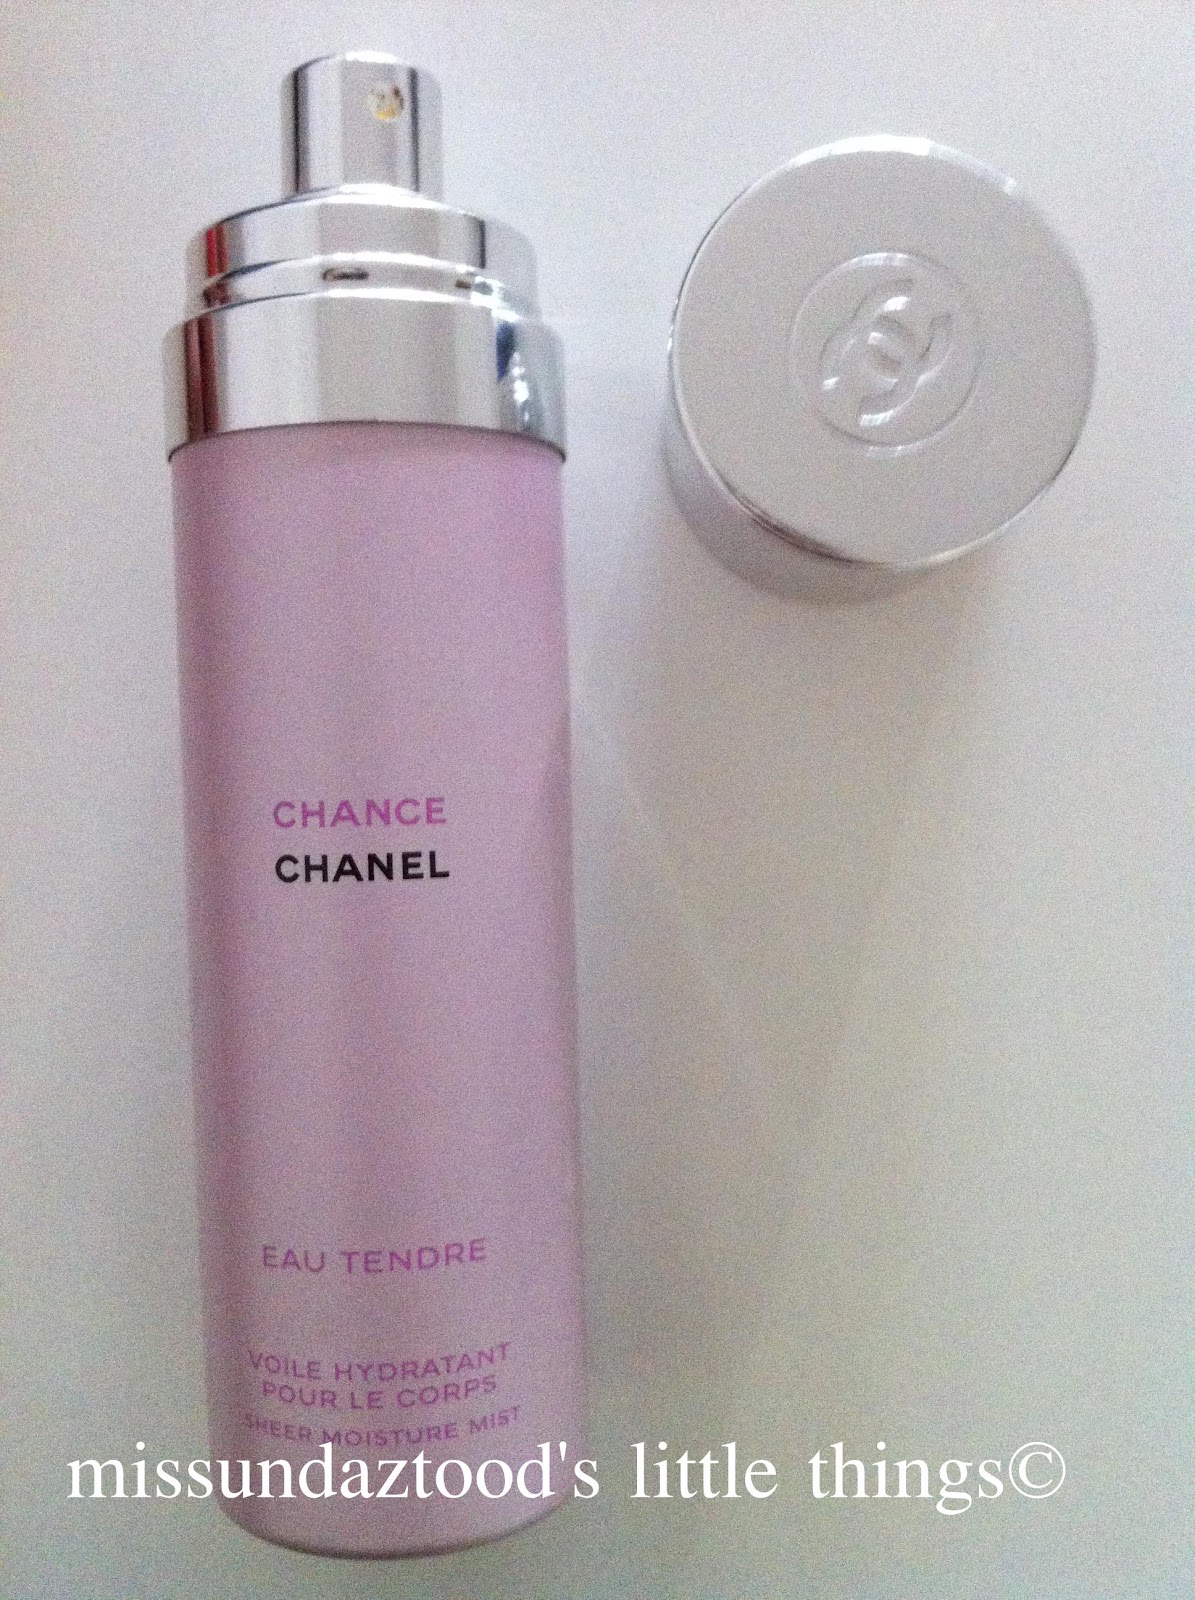 Missundaztood's Fragrance and Makeup Blog: Chanel Chance eau